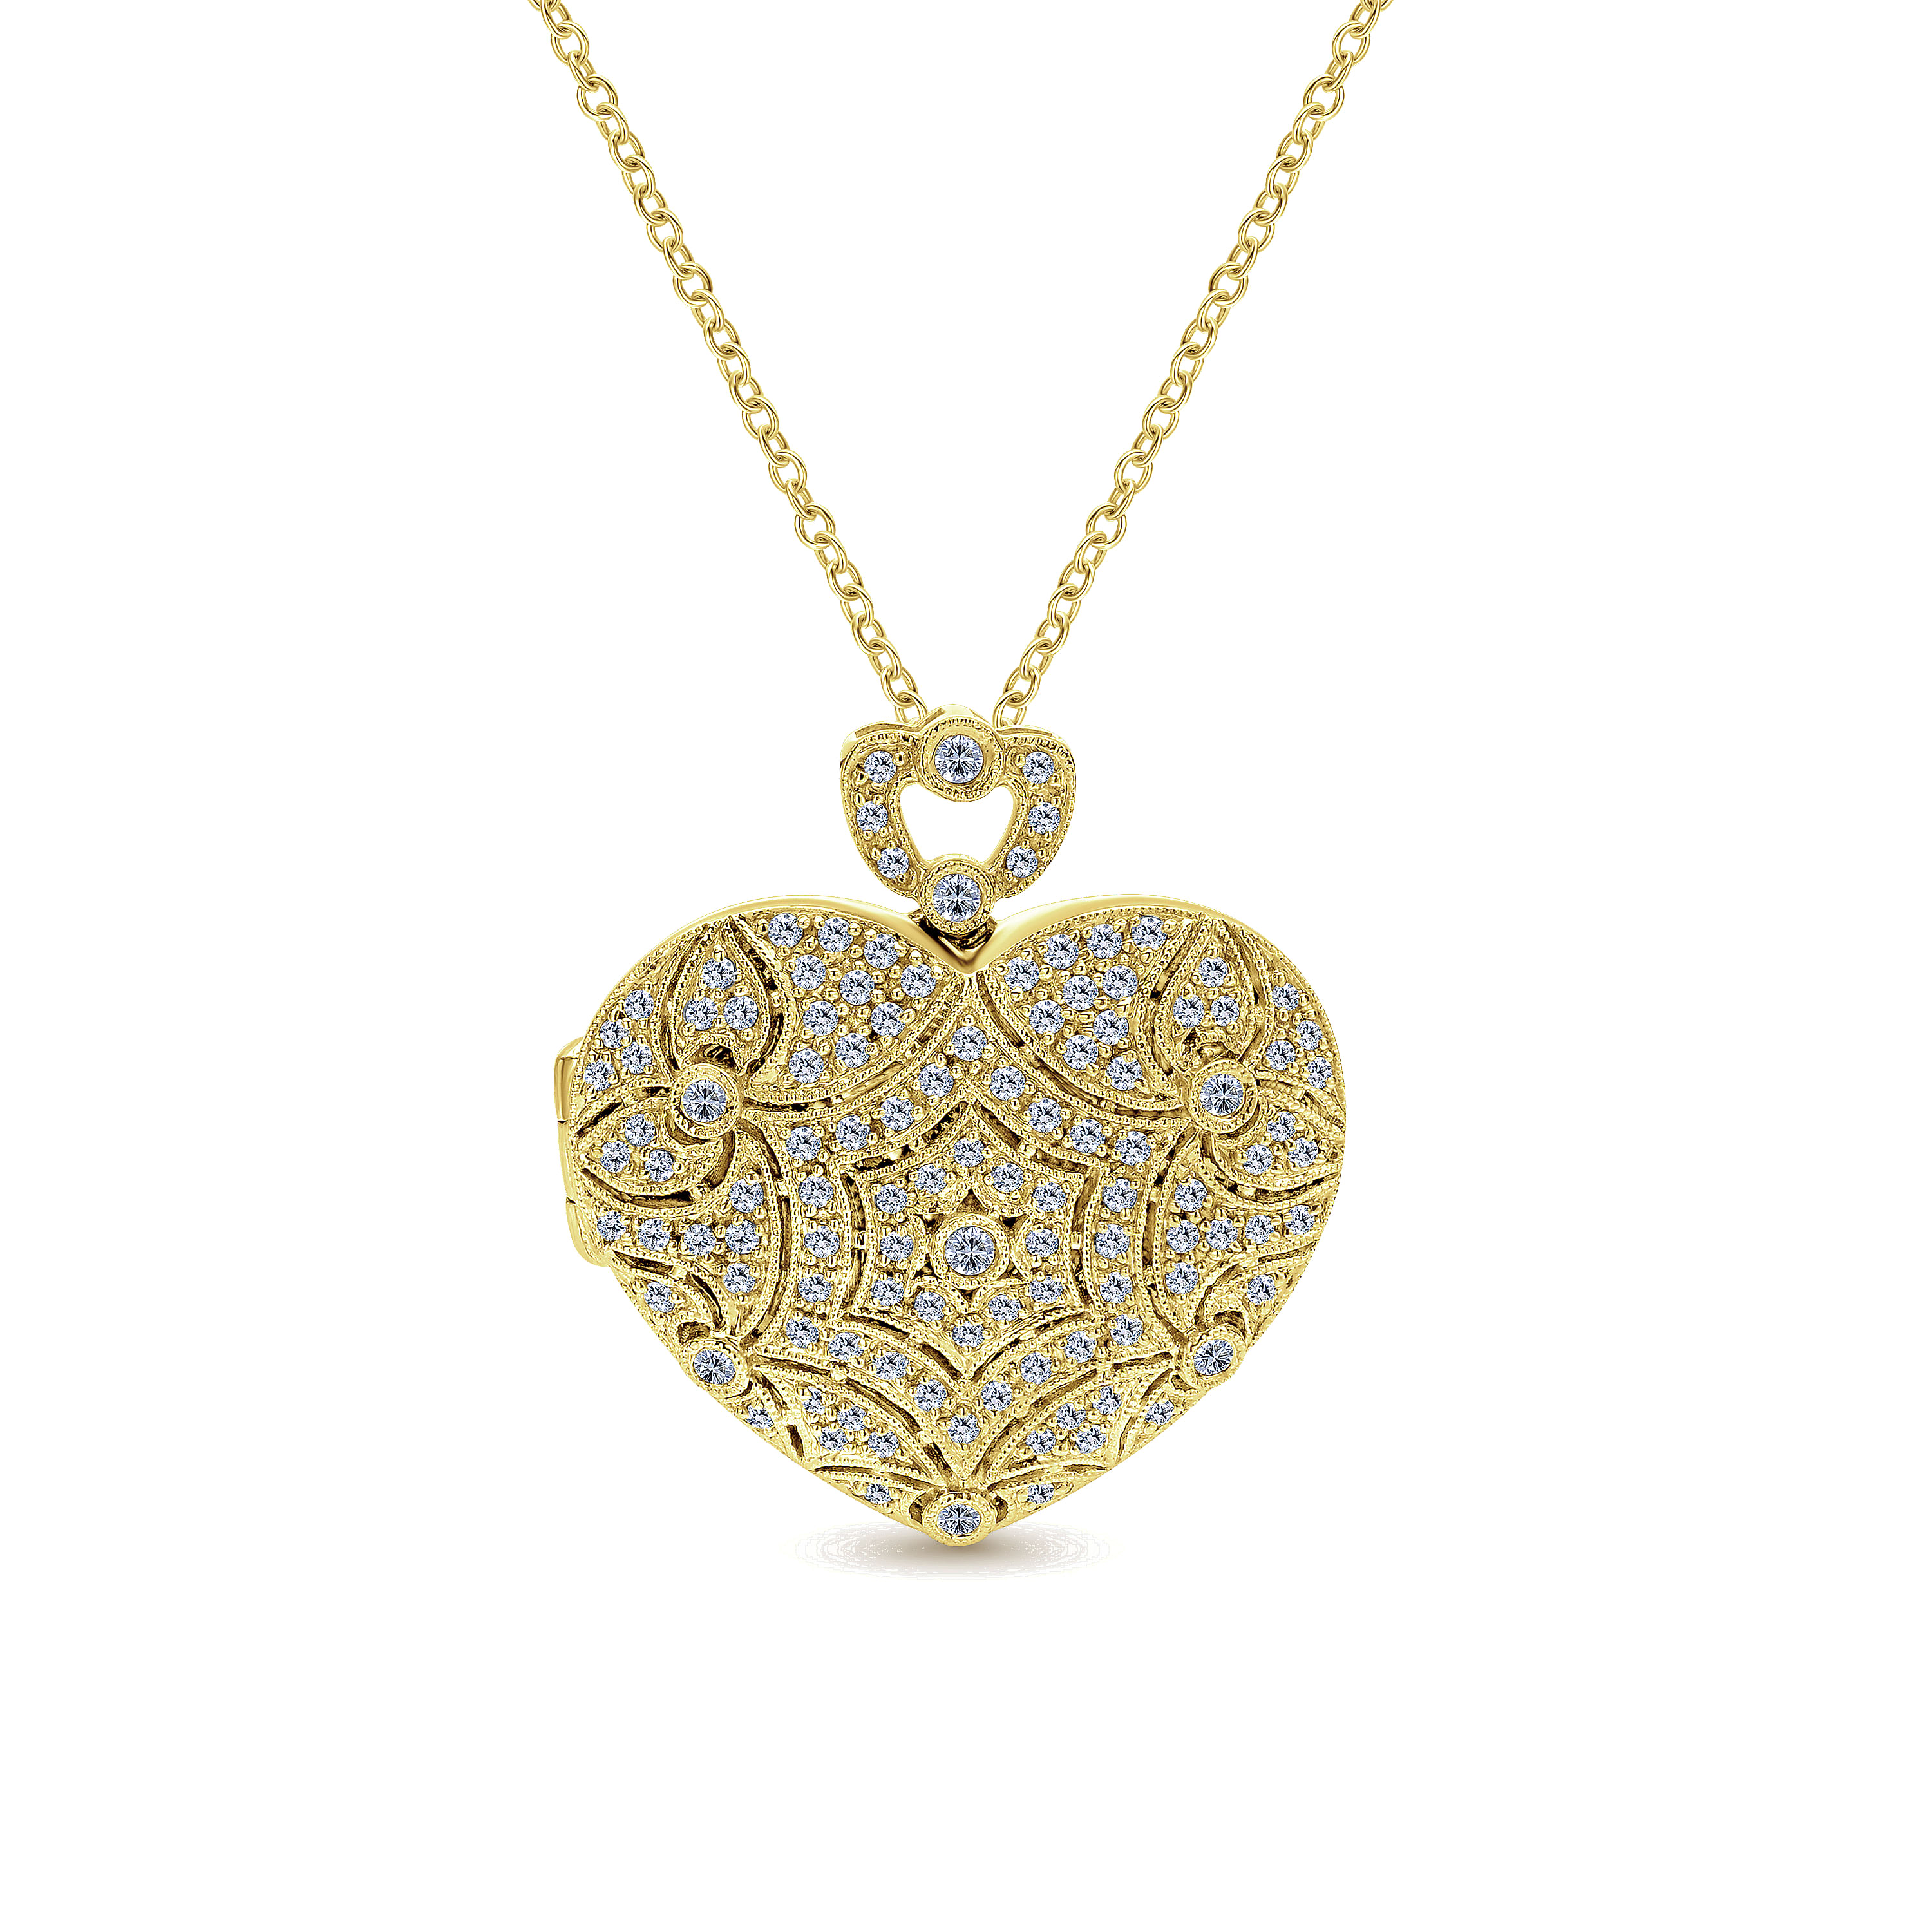 24 inch Vintage Inspired 14K Yellow Gold Heart Shaped Filigree Diamond Locket Necklace